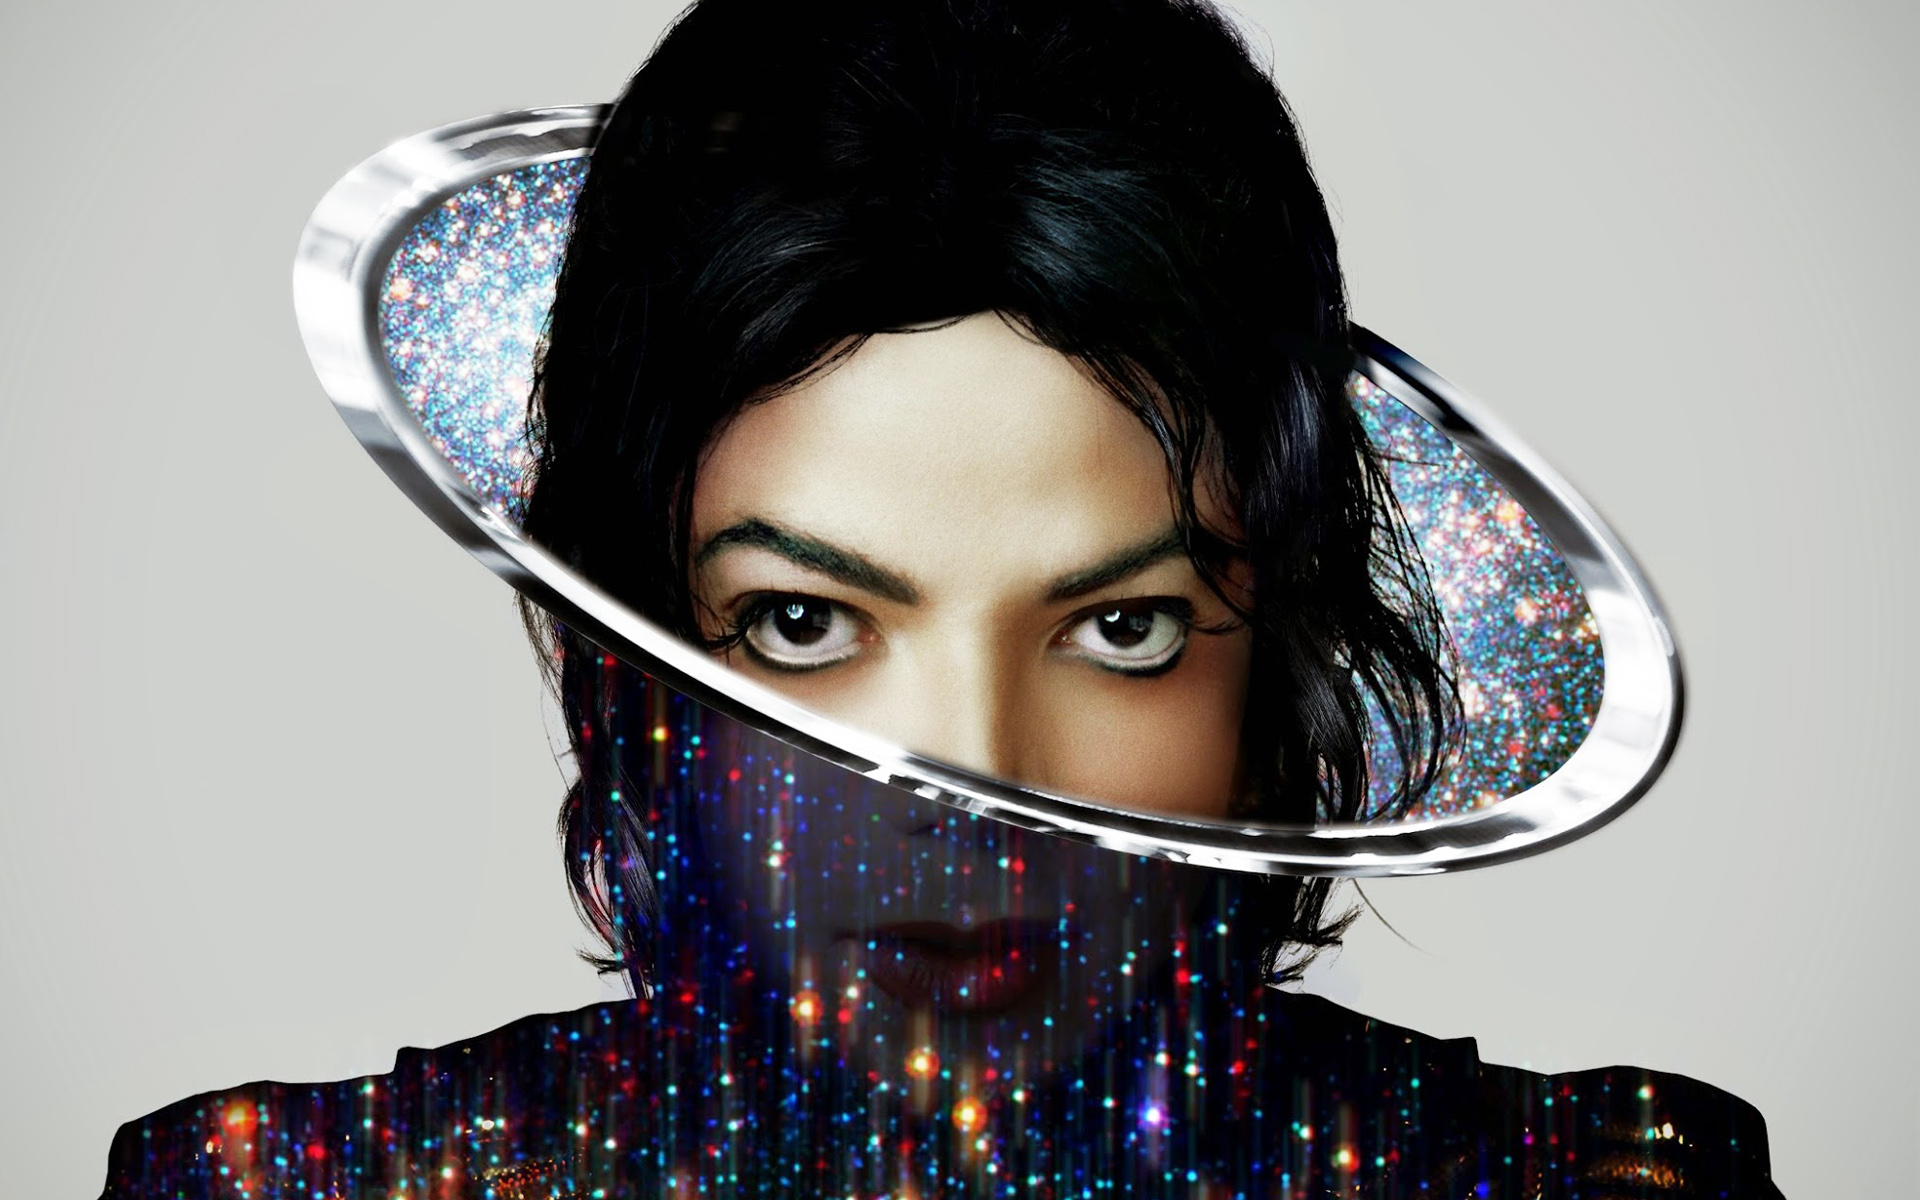 Music Michael Jackson HD Wallpaper | Background Image